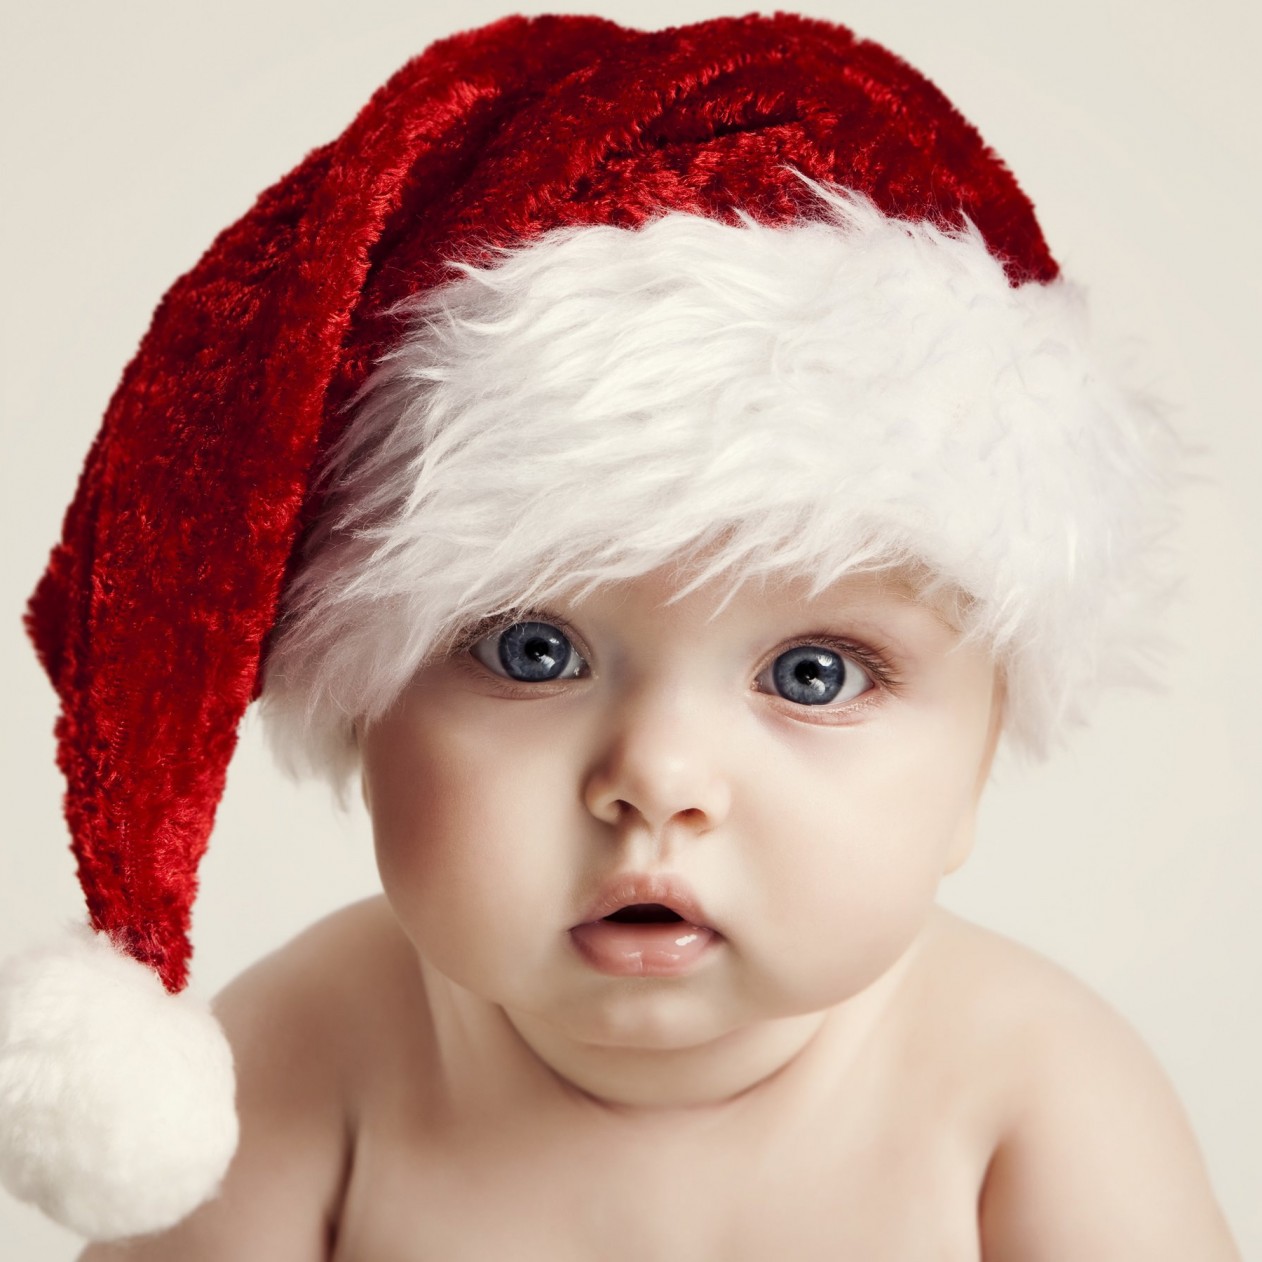 Santa Claus Baby Boy Wallpaper for Apple iPad mini